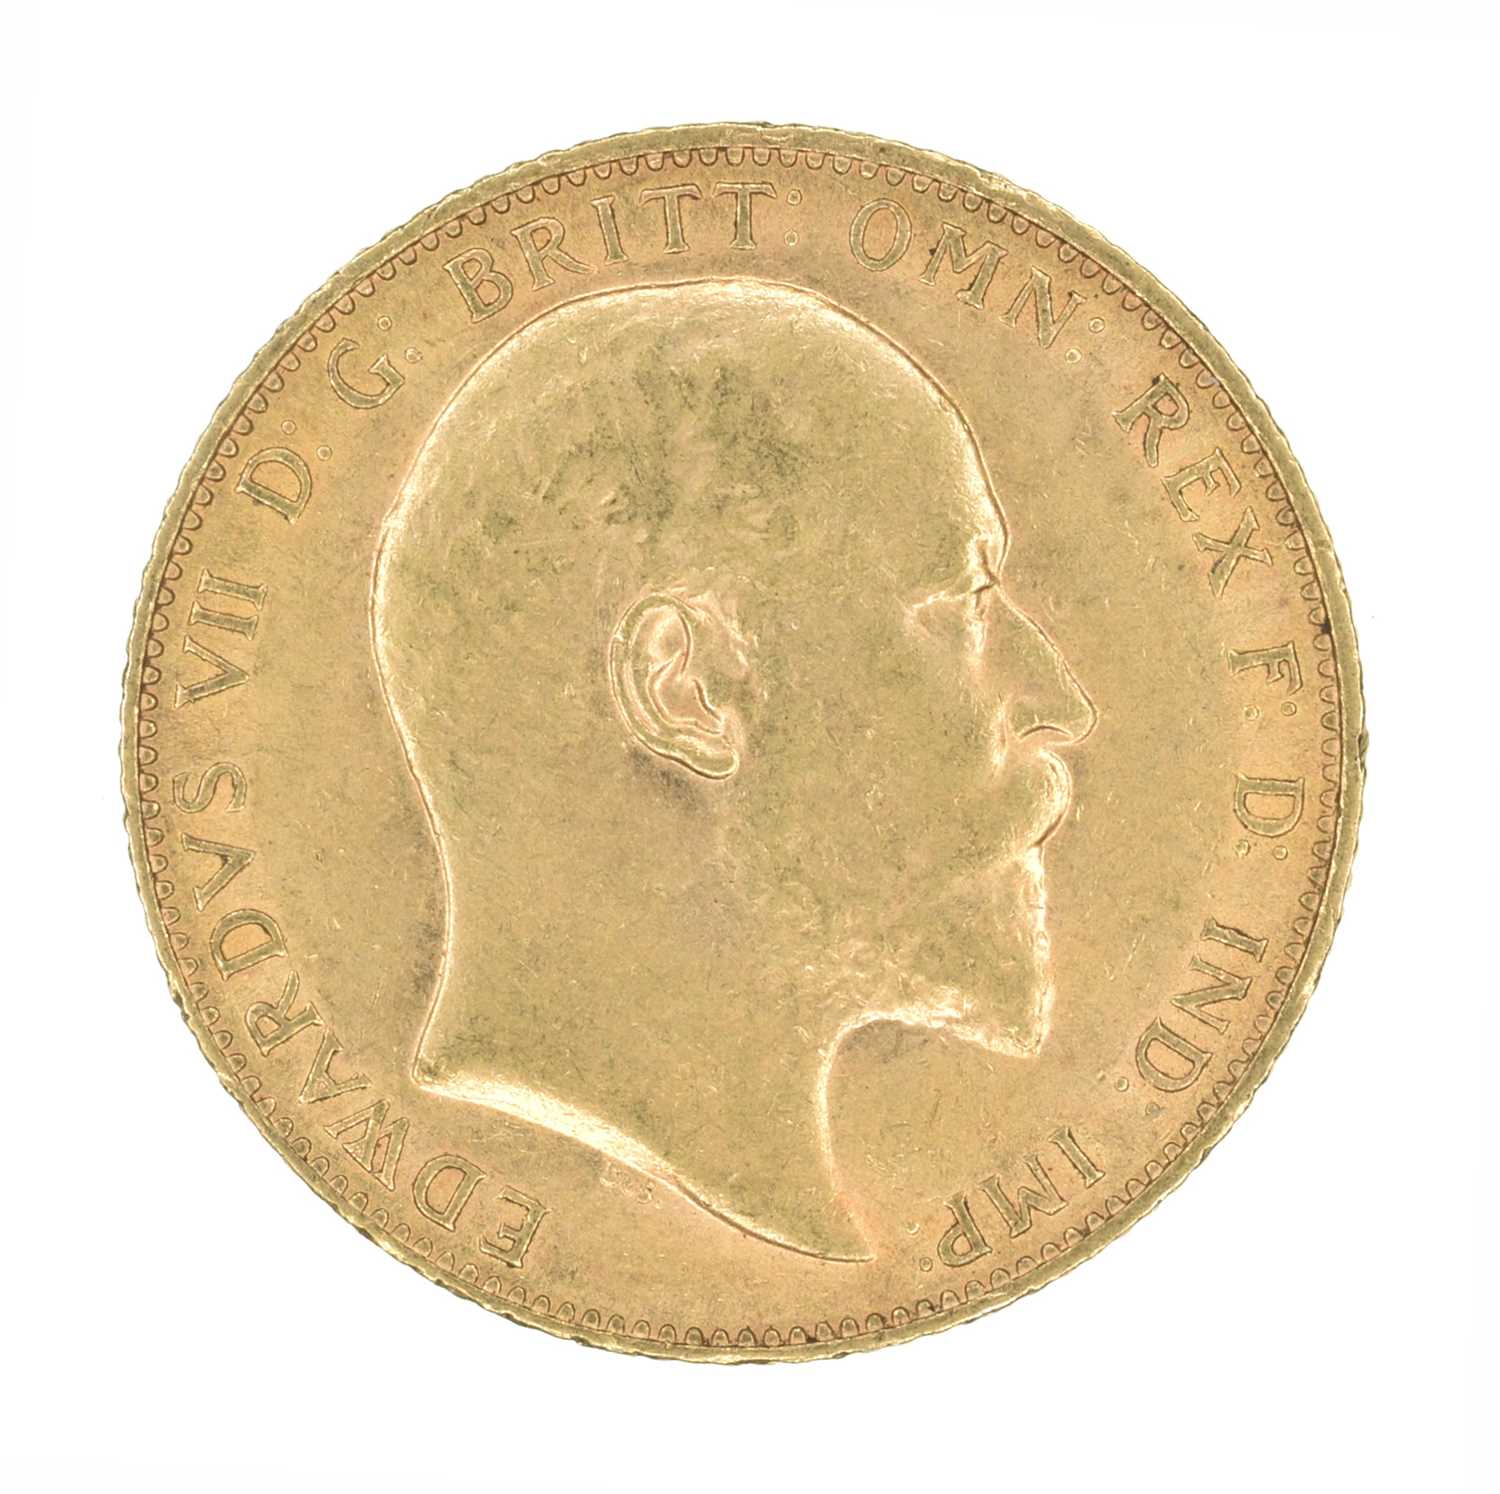 Lot 118 - King Edward VII, Sovereign, 1909.